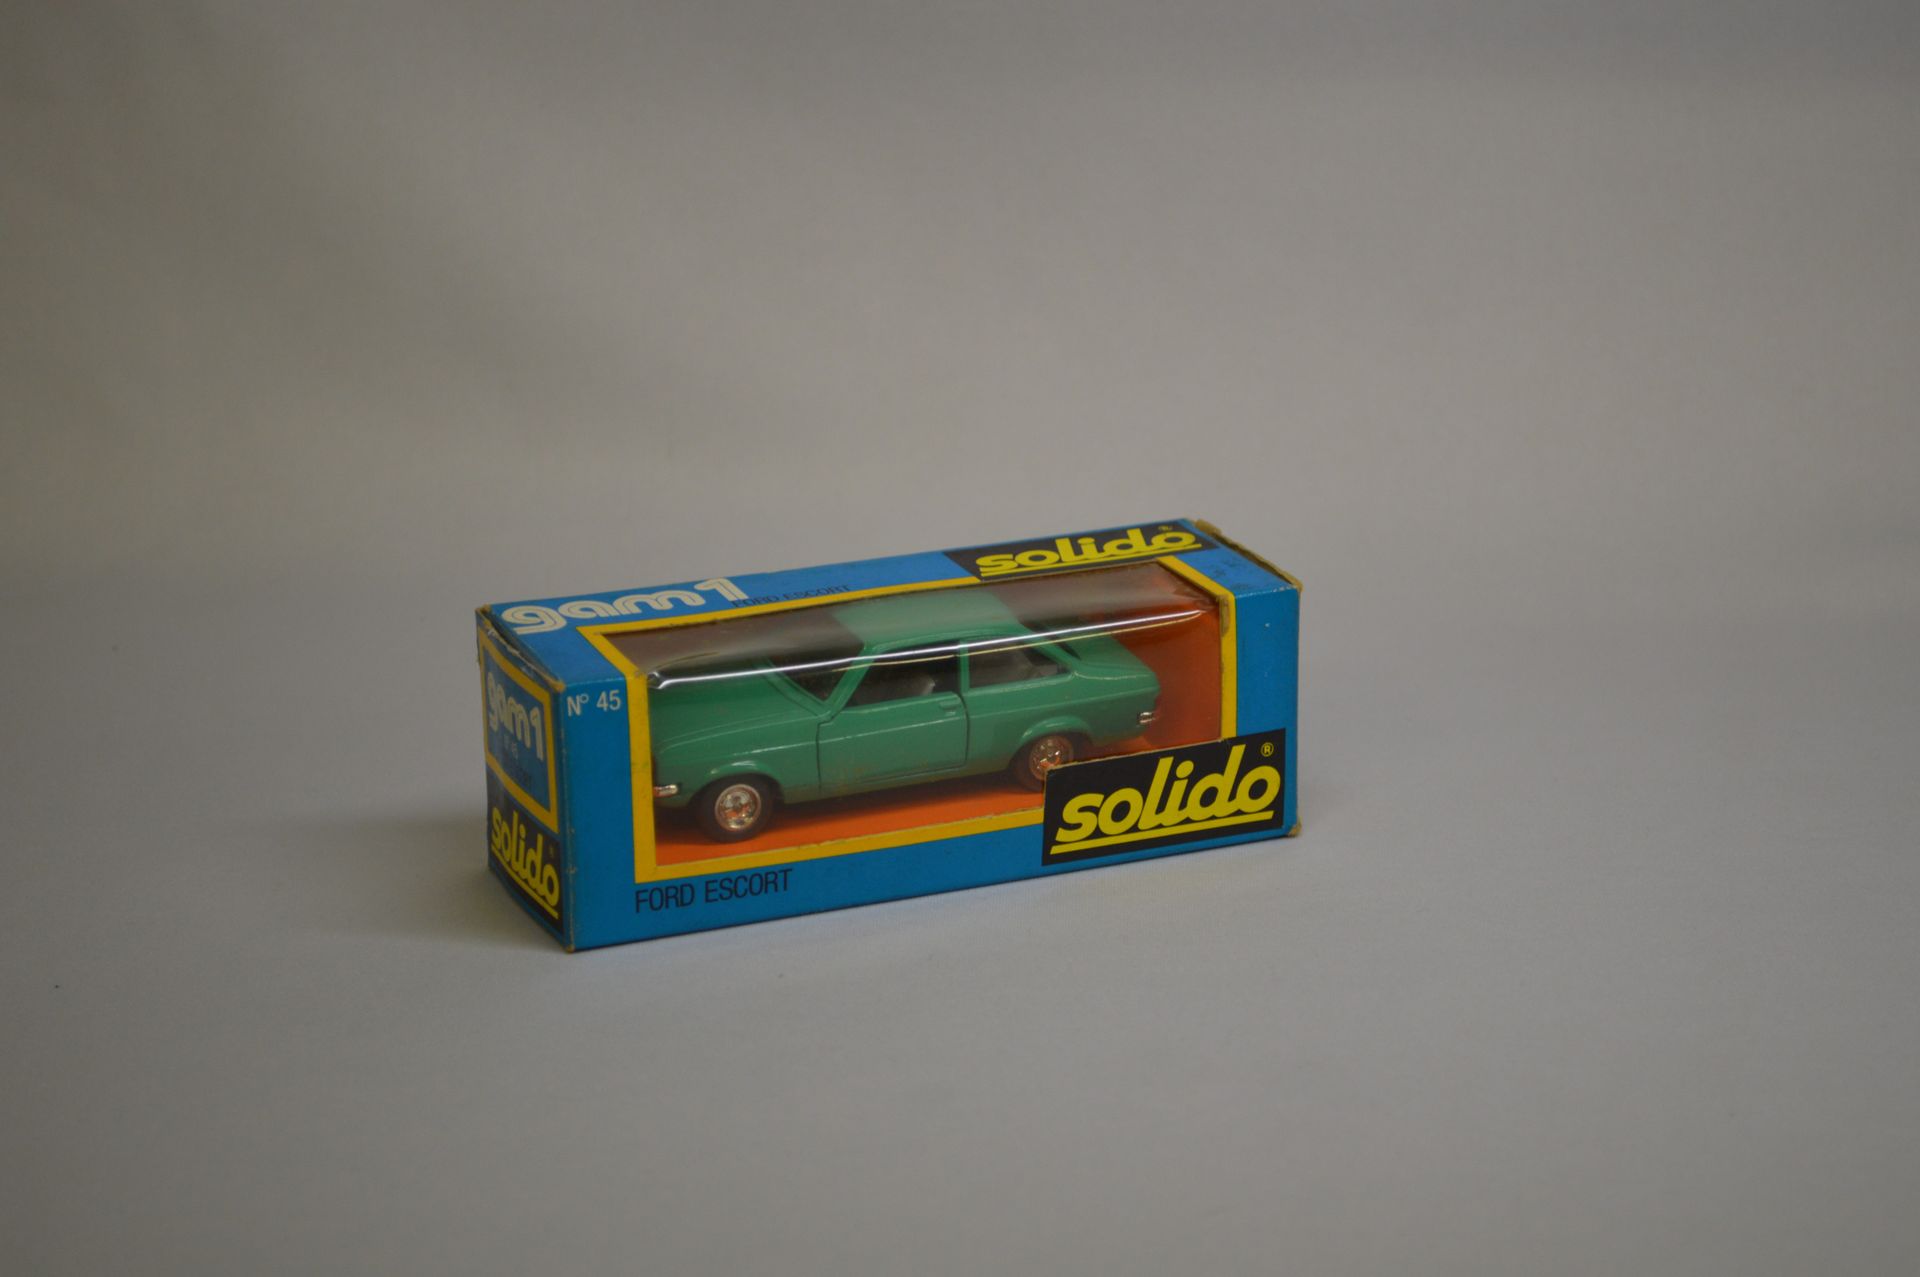 Null SOLIDO - GAM 1 - Personenwagen : Ford Escort, Nr. 45, grün.

Original Box. &hellip;